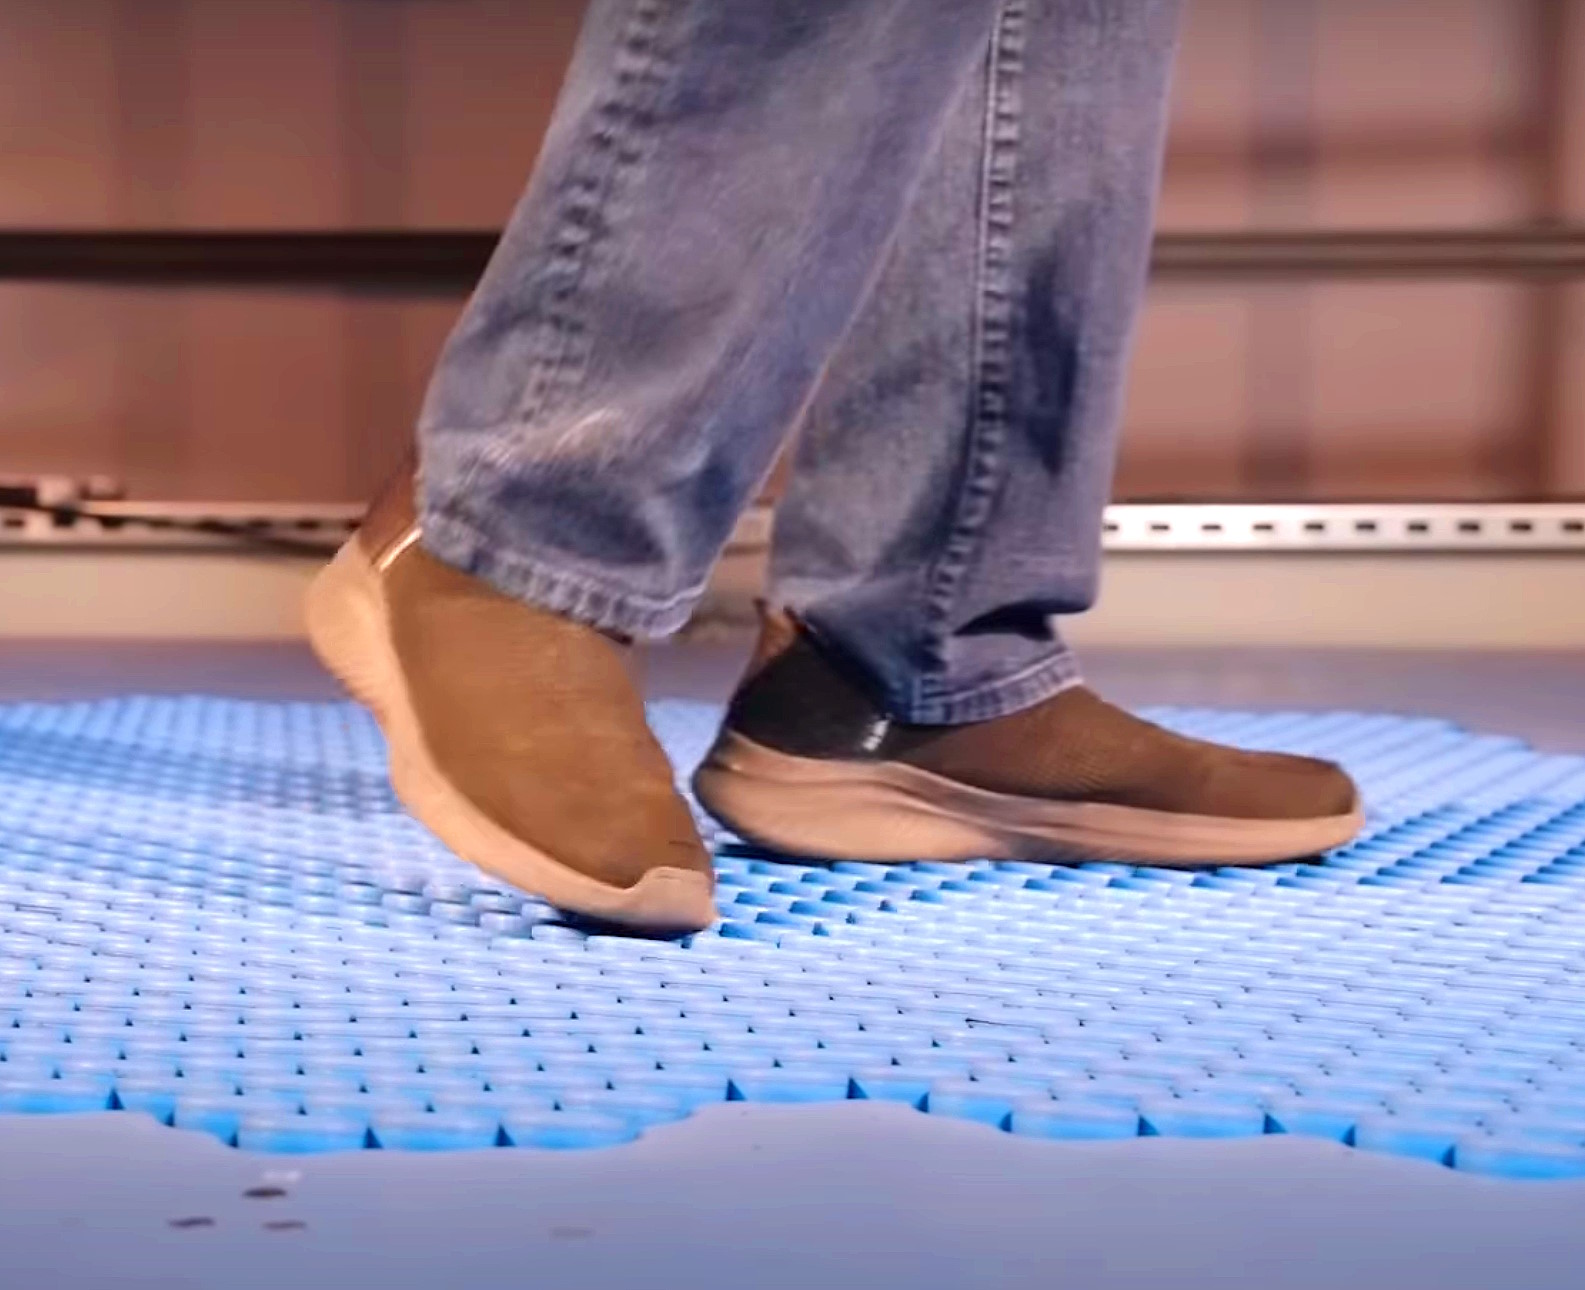 Disney Imagineer Lanny Smoot unveils Holotile – a multi-person, VR walking treadmill prototype